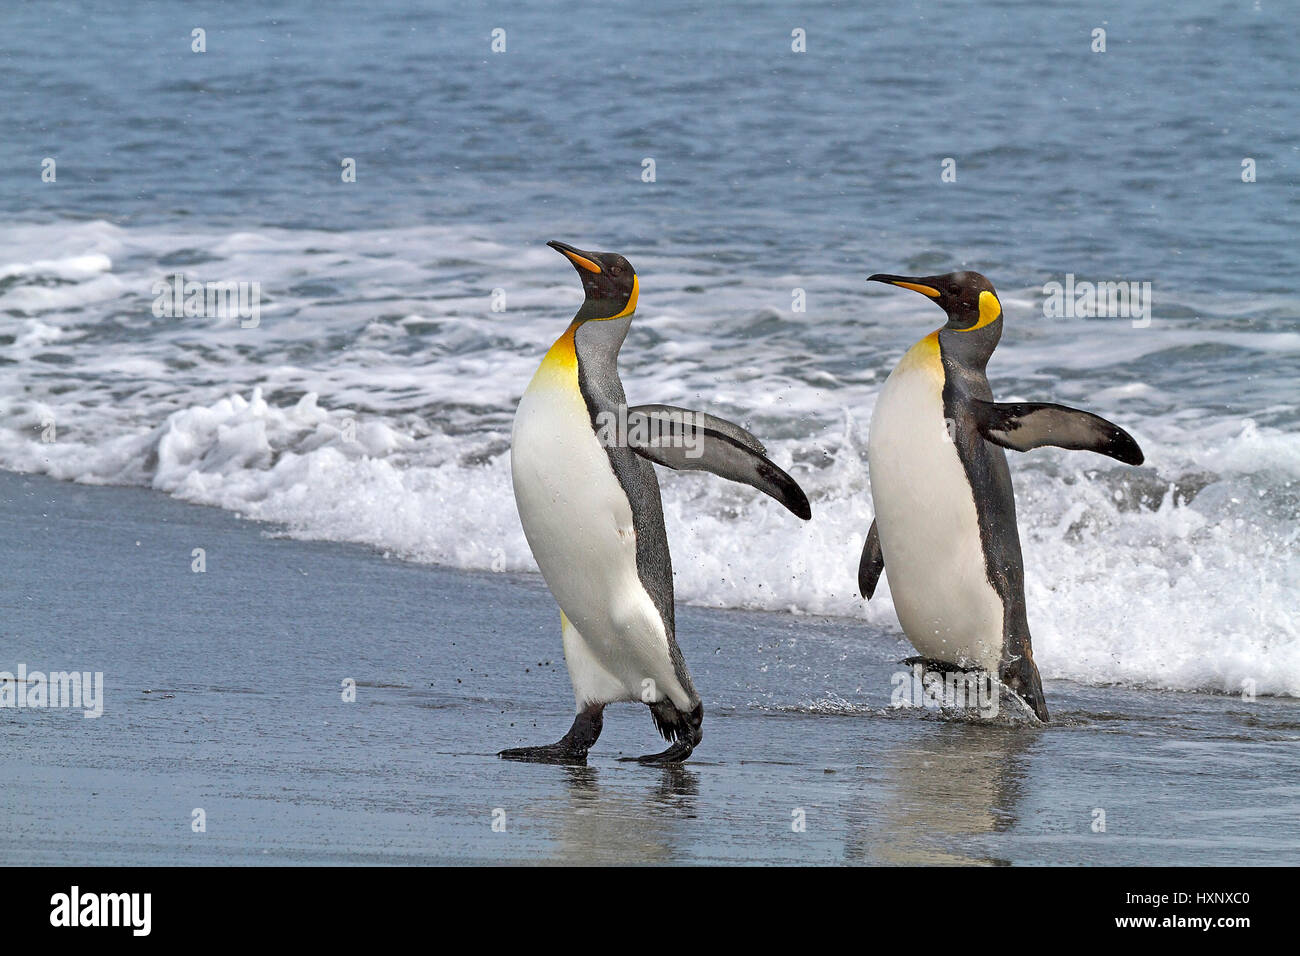 Des Königs Pinguine - Suedgeorgien - Antarktis, Koenigspinguine - Suedgeorgien - Antarktis Stockfoto